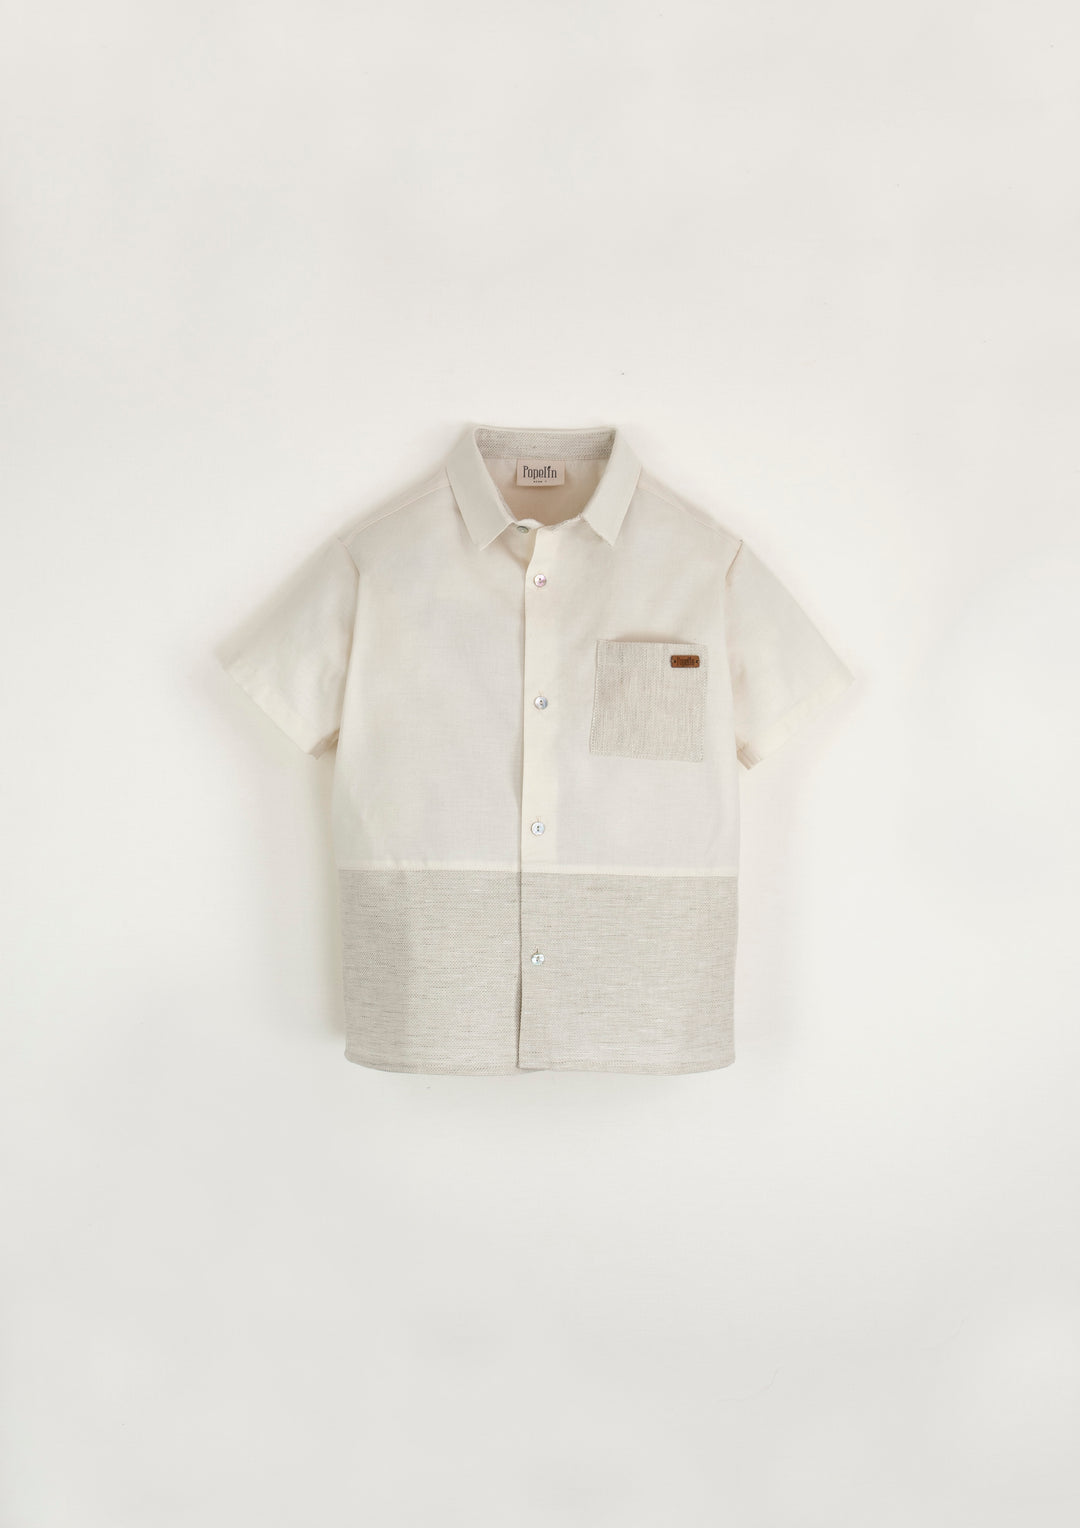 24.5 Neutral colour shirt w/collar and pocket